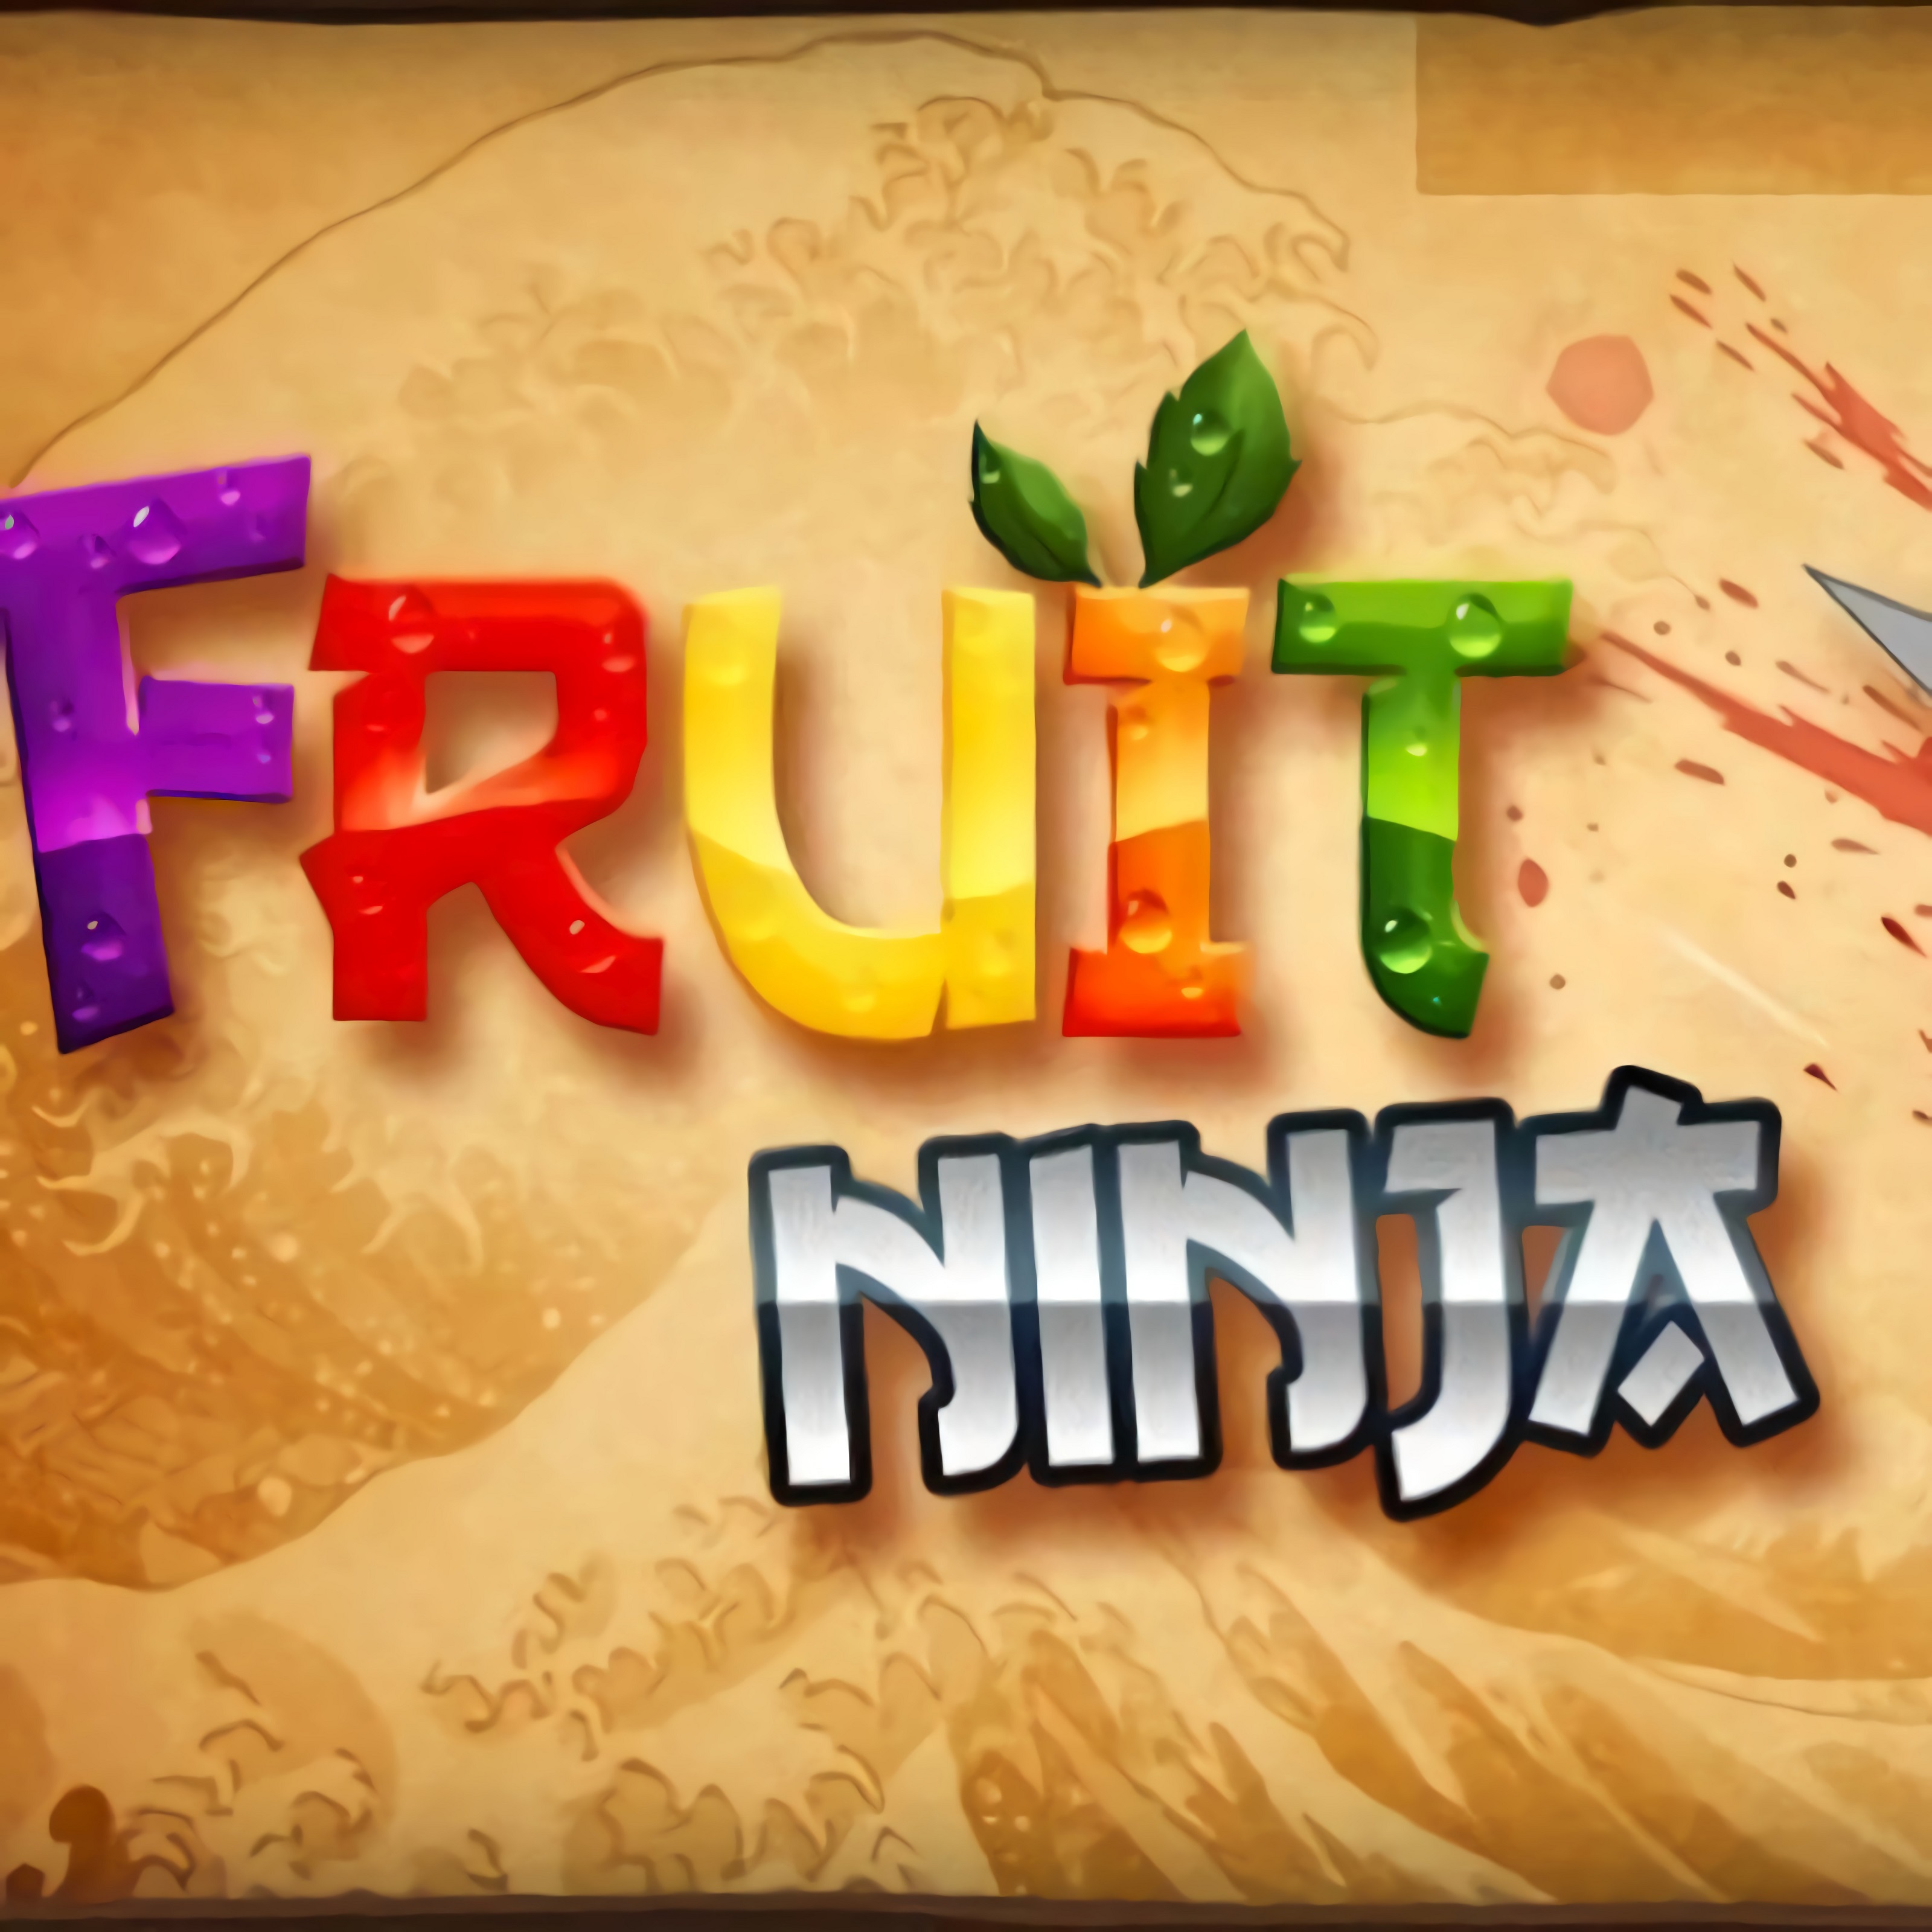 FRIDAY NIGHT FUNKIN': FRUIT NINJA free online game on